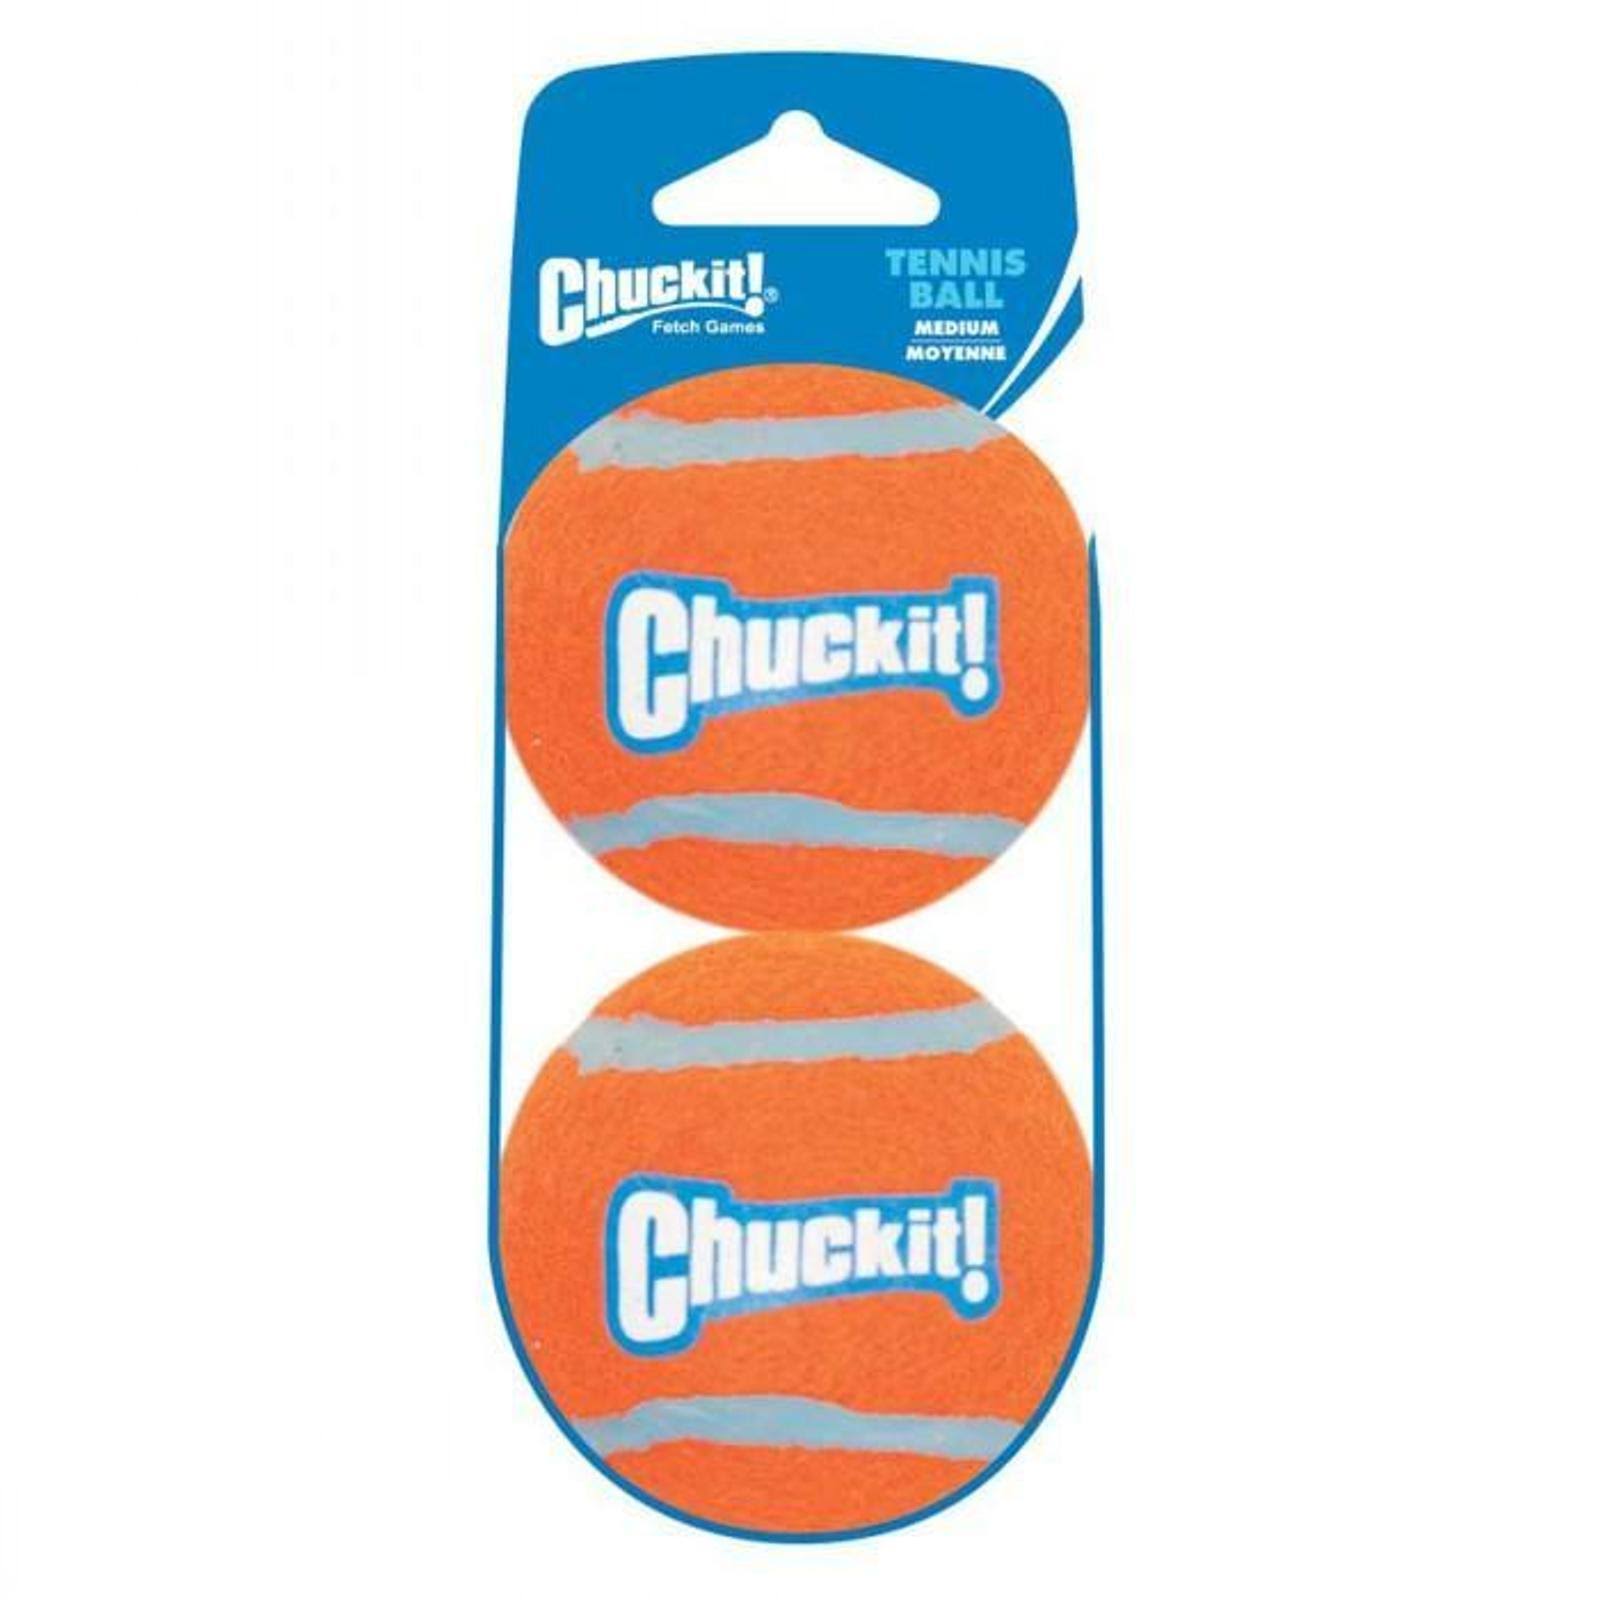 Chuckit! Small Tennis Ball - Medium, 2.5", 2 Pack